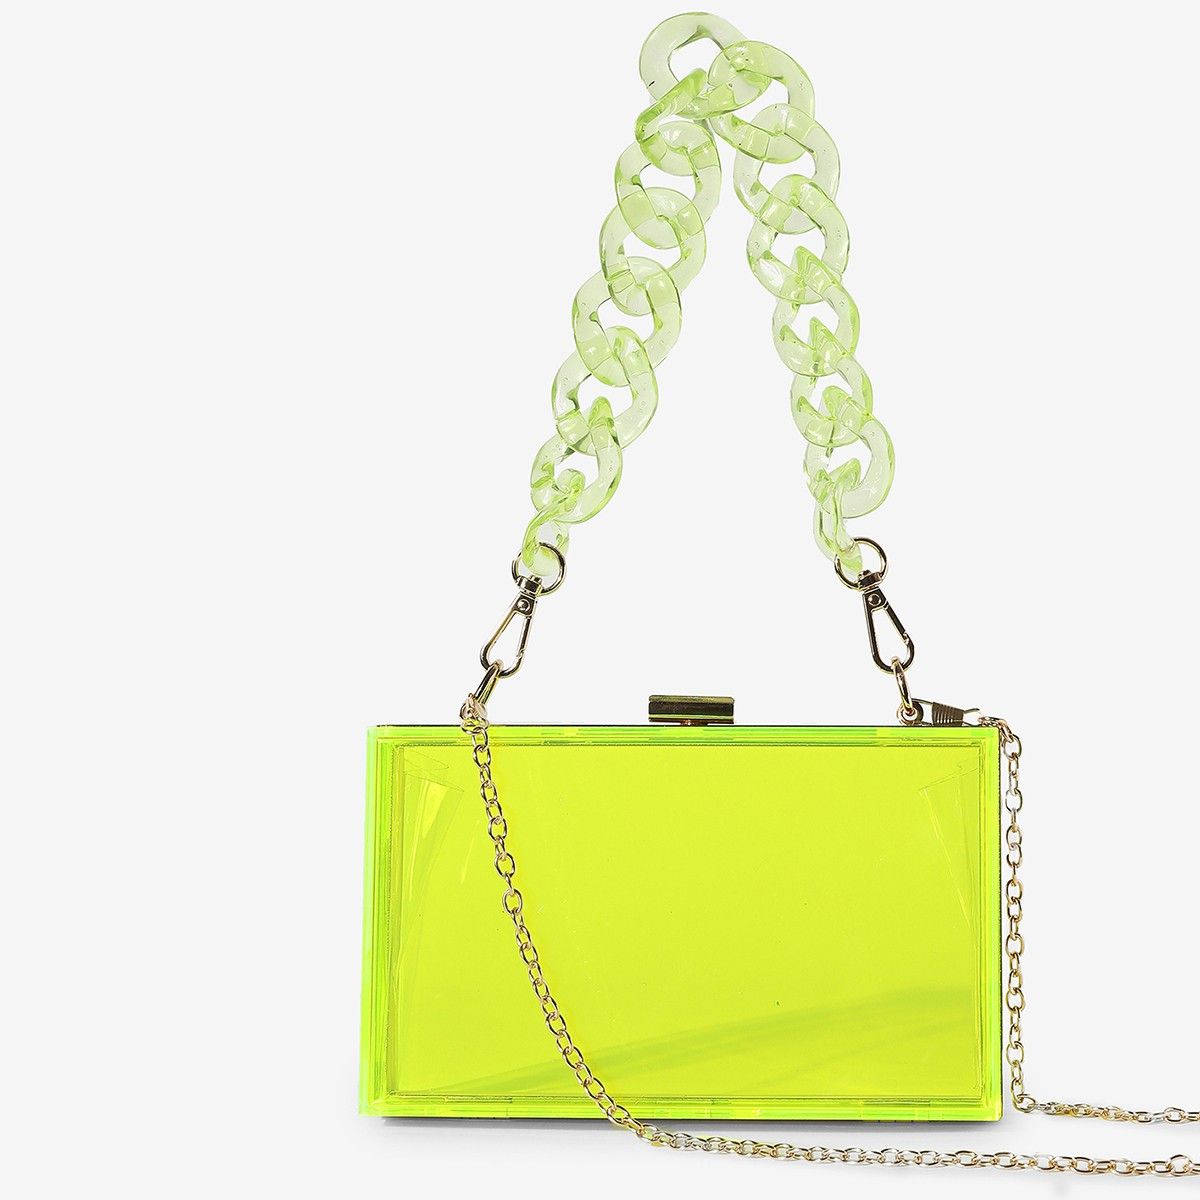 CLUTCH SAILBAG: Kelly Green, Aqua and Neon Green — Hoist Away Bags